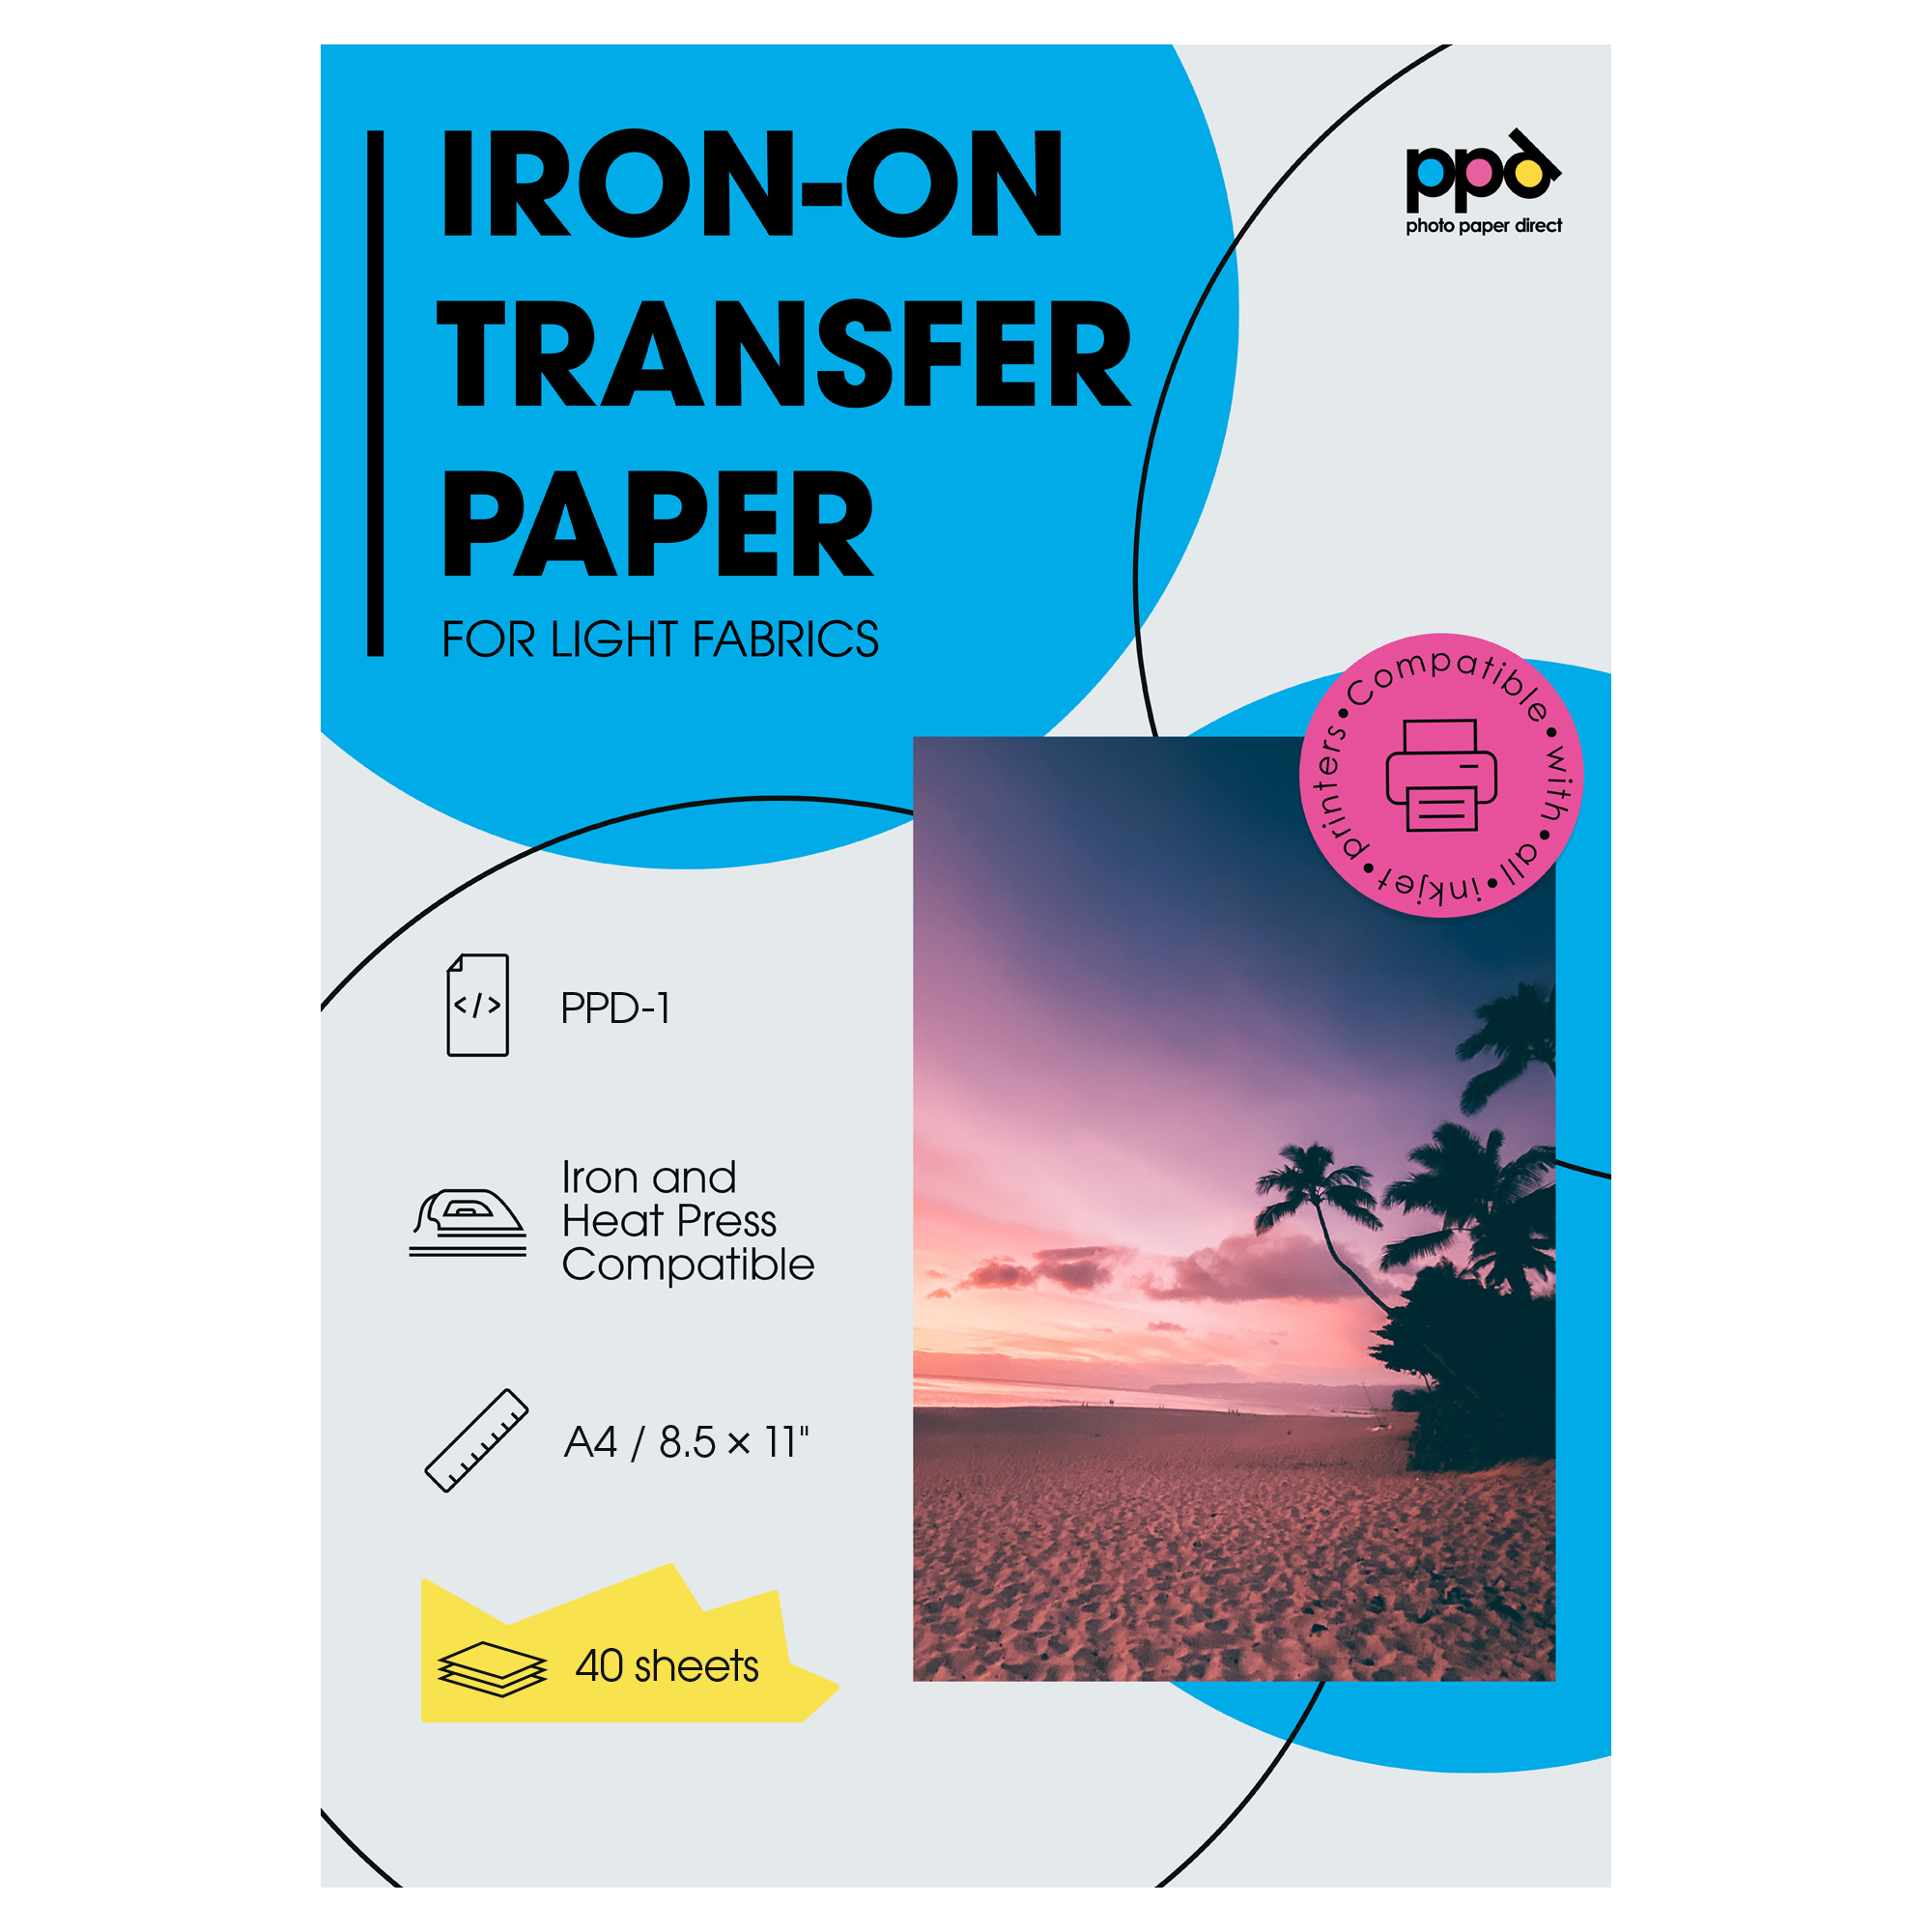 InkJet/Laser Transfer Paper For Dark Fabrics 8.5x11